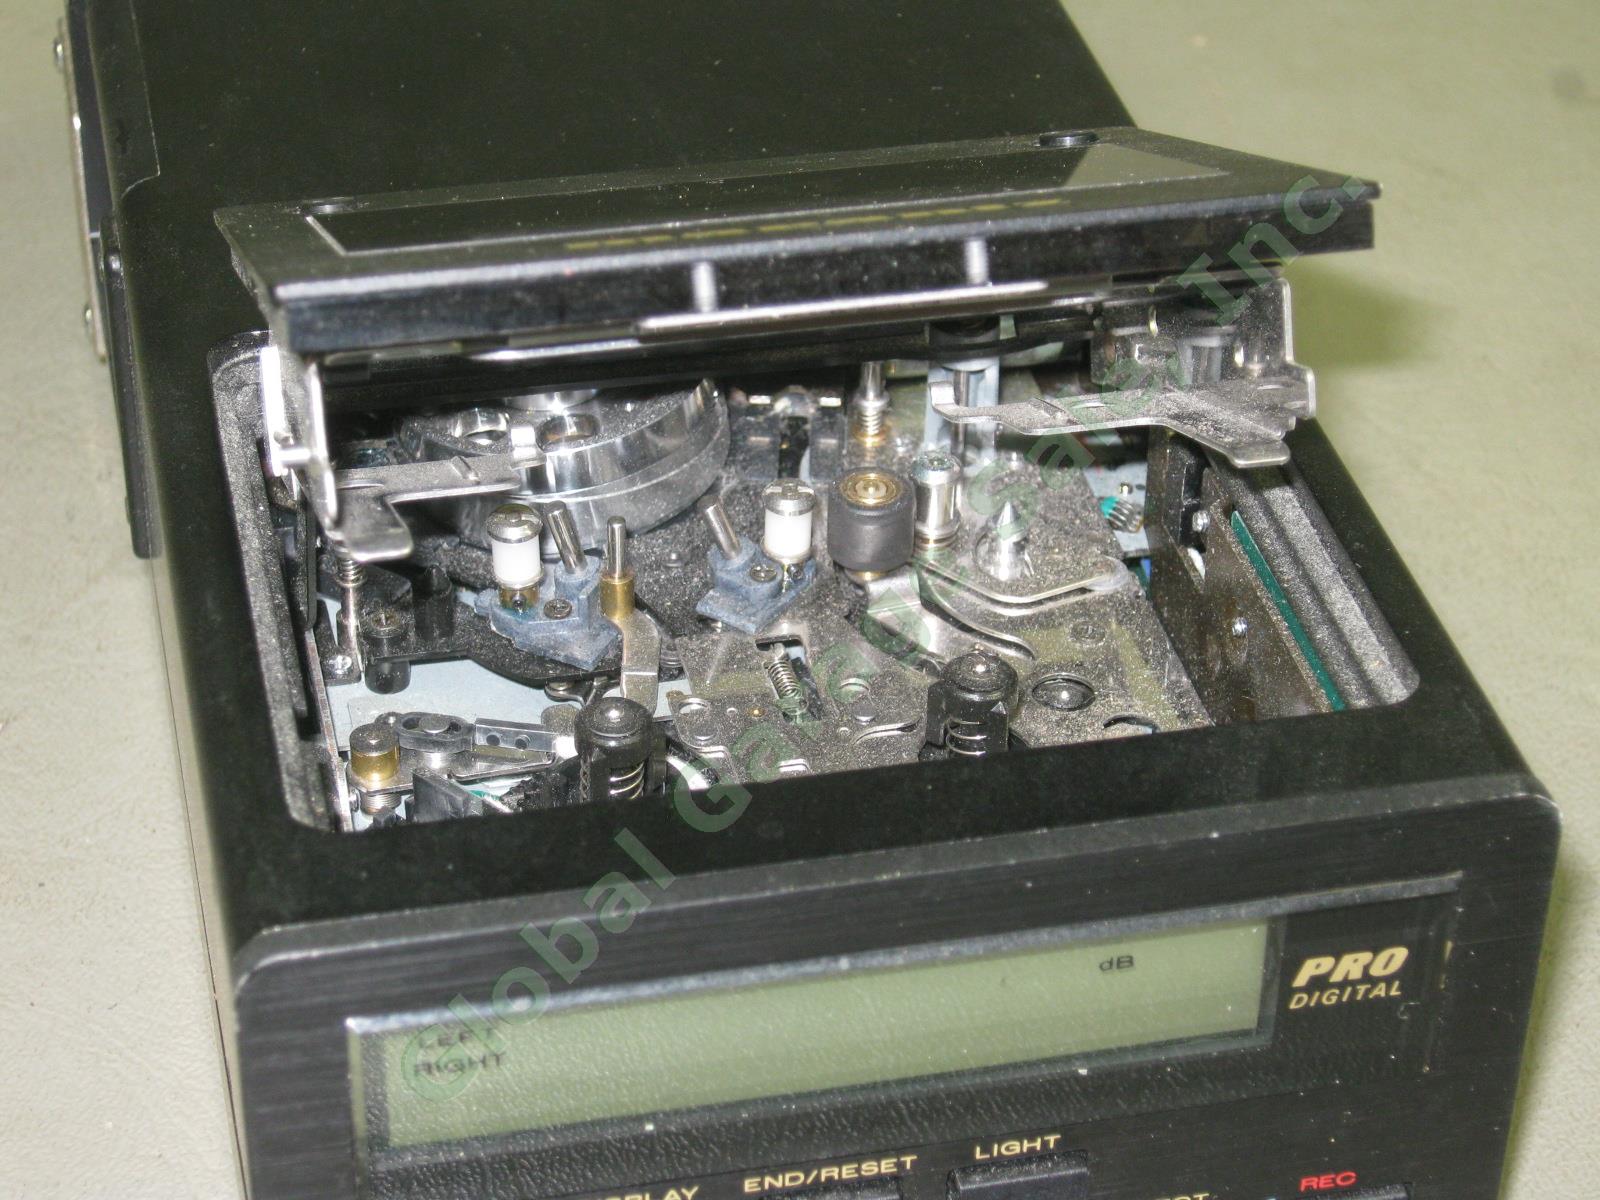 Marantz PMD700 Professional DAT Digital Audio Tape Deck Recorder +AC Adapter Lot 6